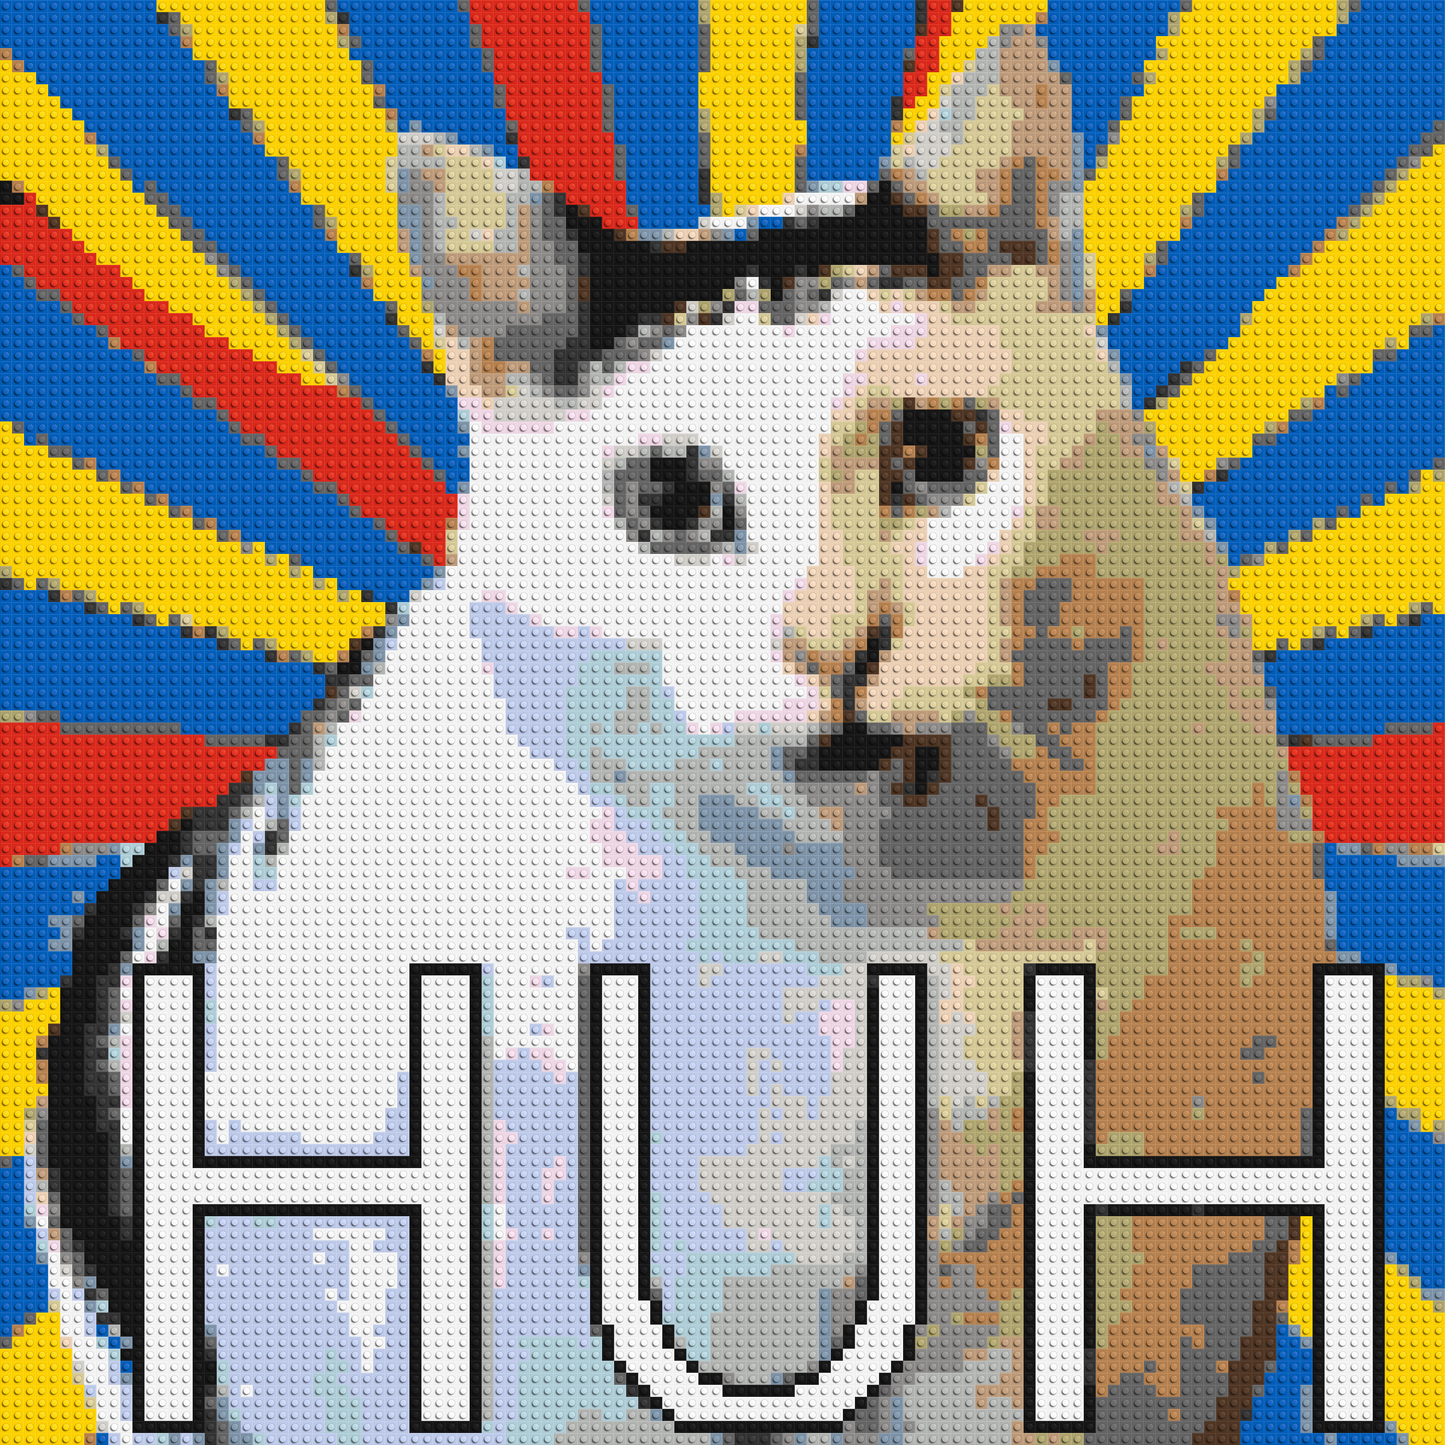 Huh Cat Meme - Brick Art Mosaic Kit 5x5 large